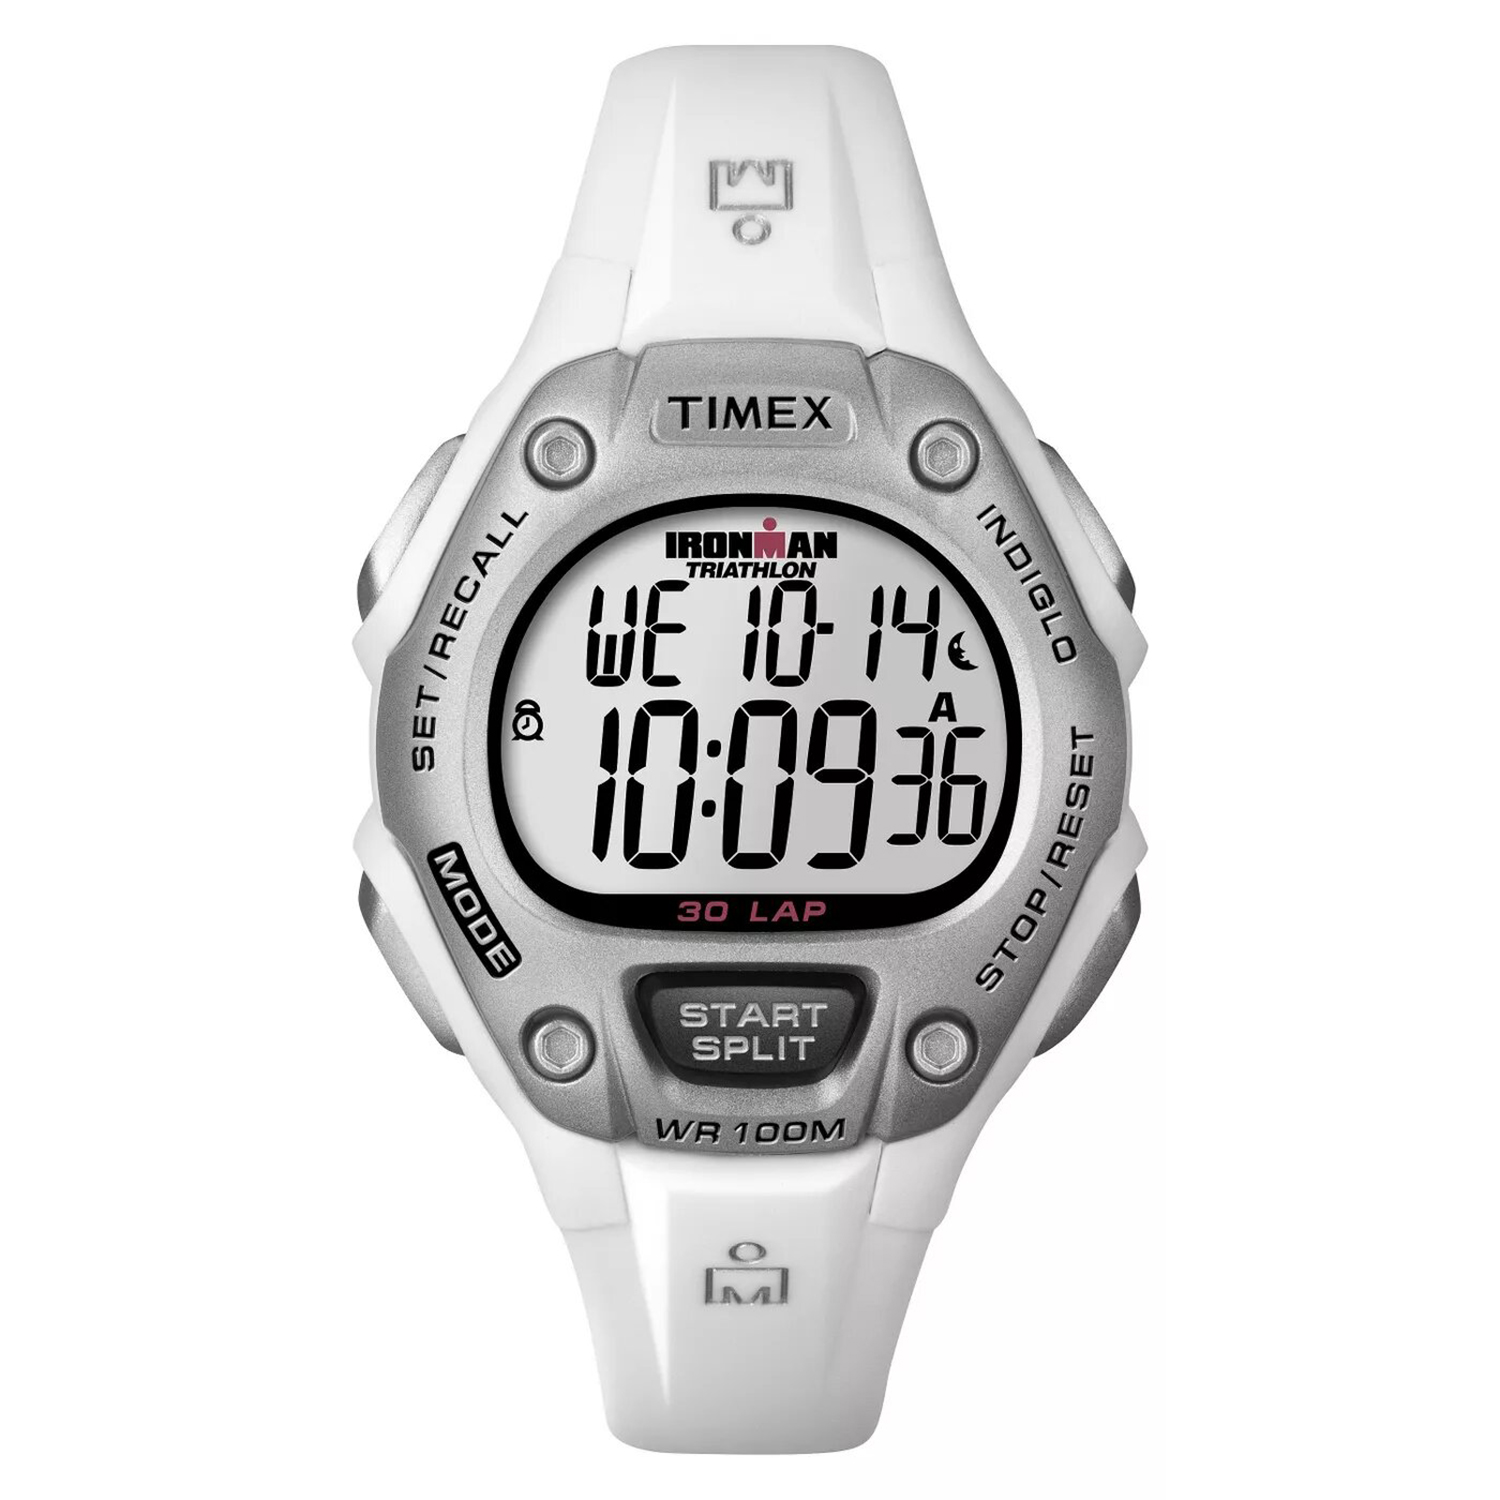 Timex Ironman Classic 30 Lap Digital Watch